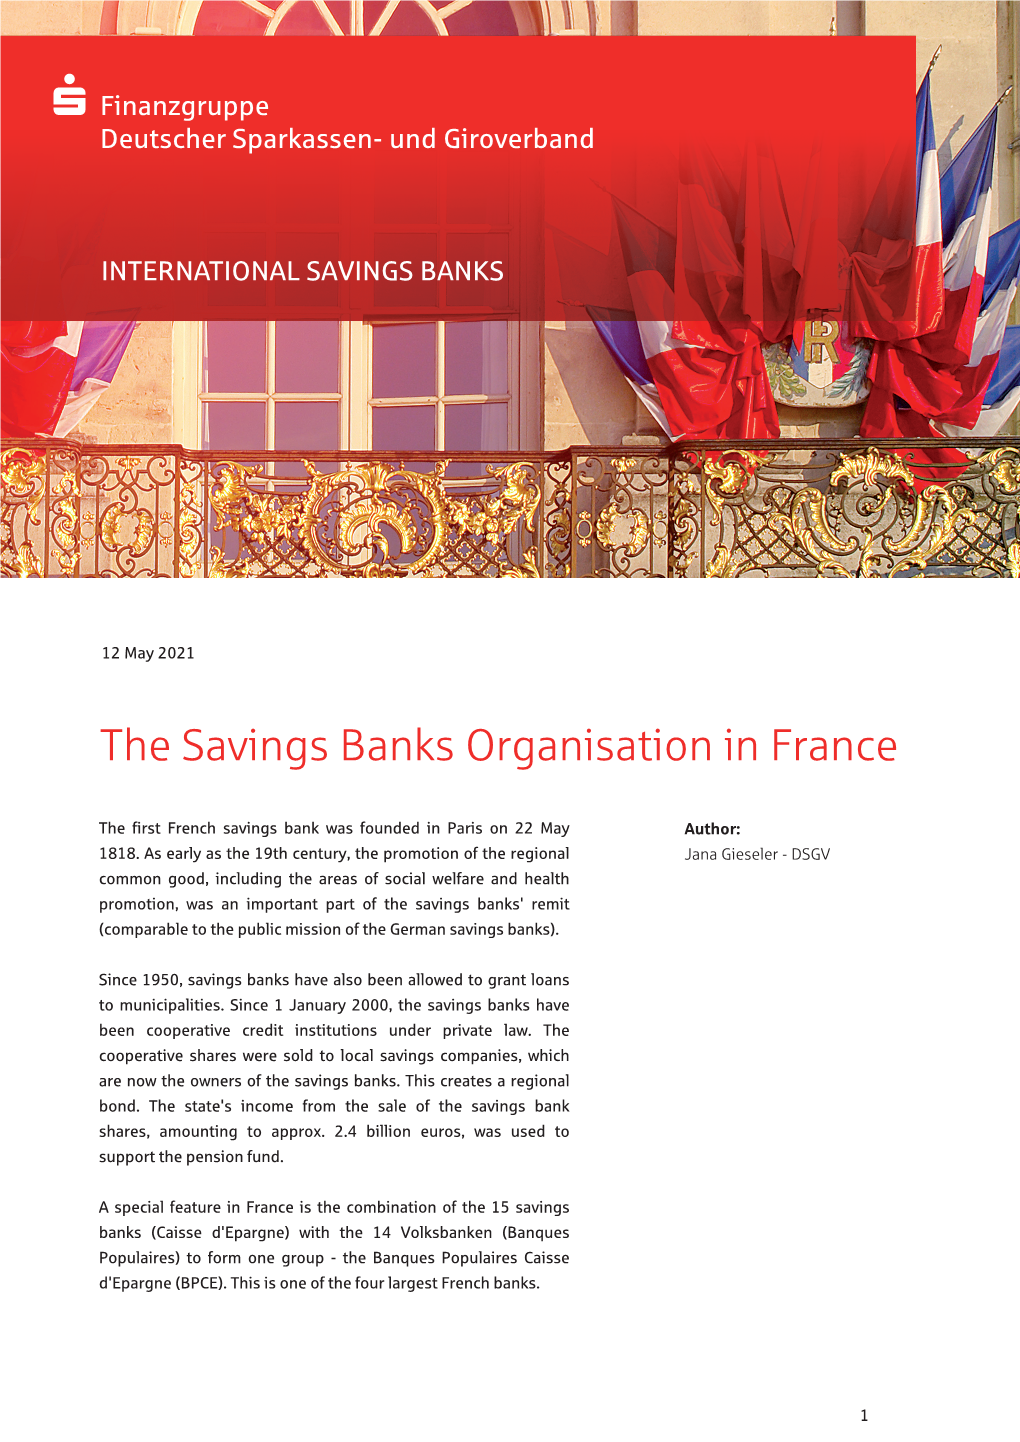 The Savings Banks Organisation in France